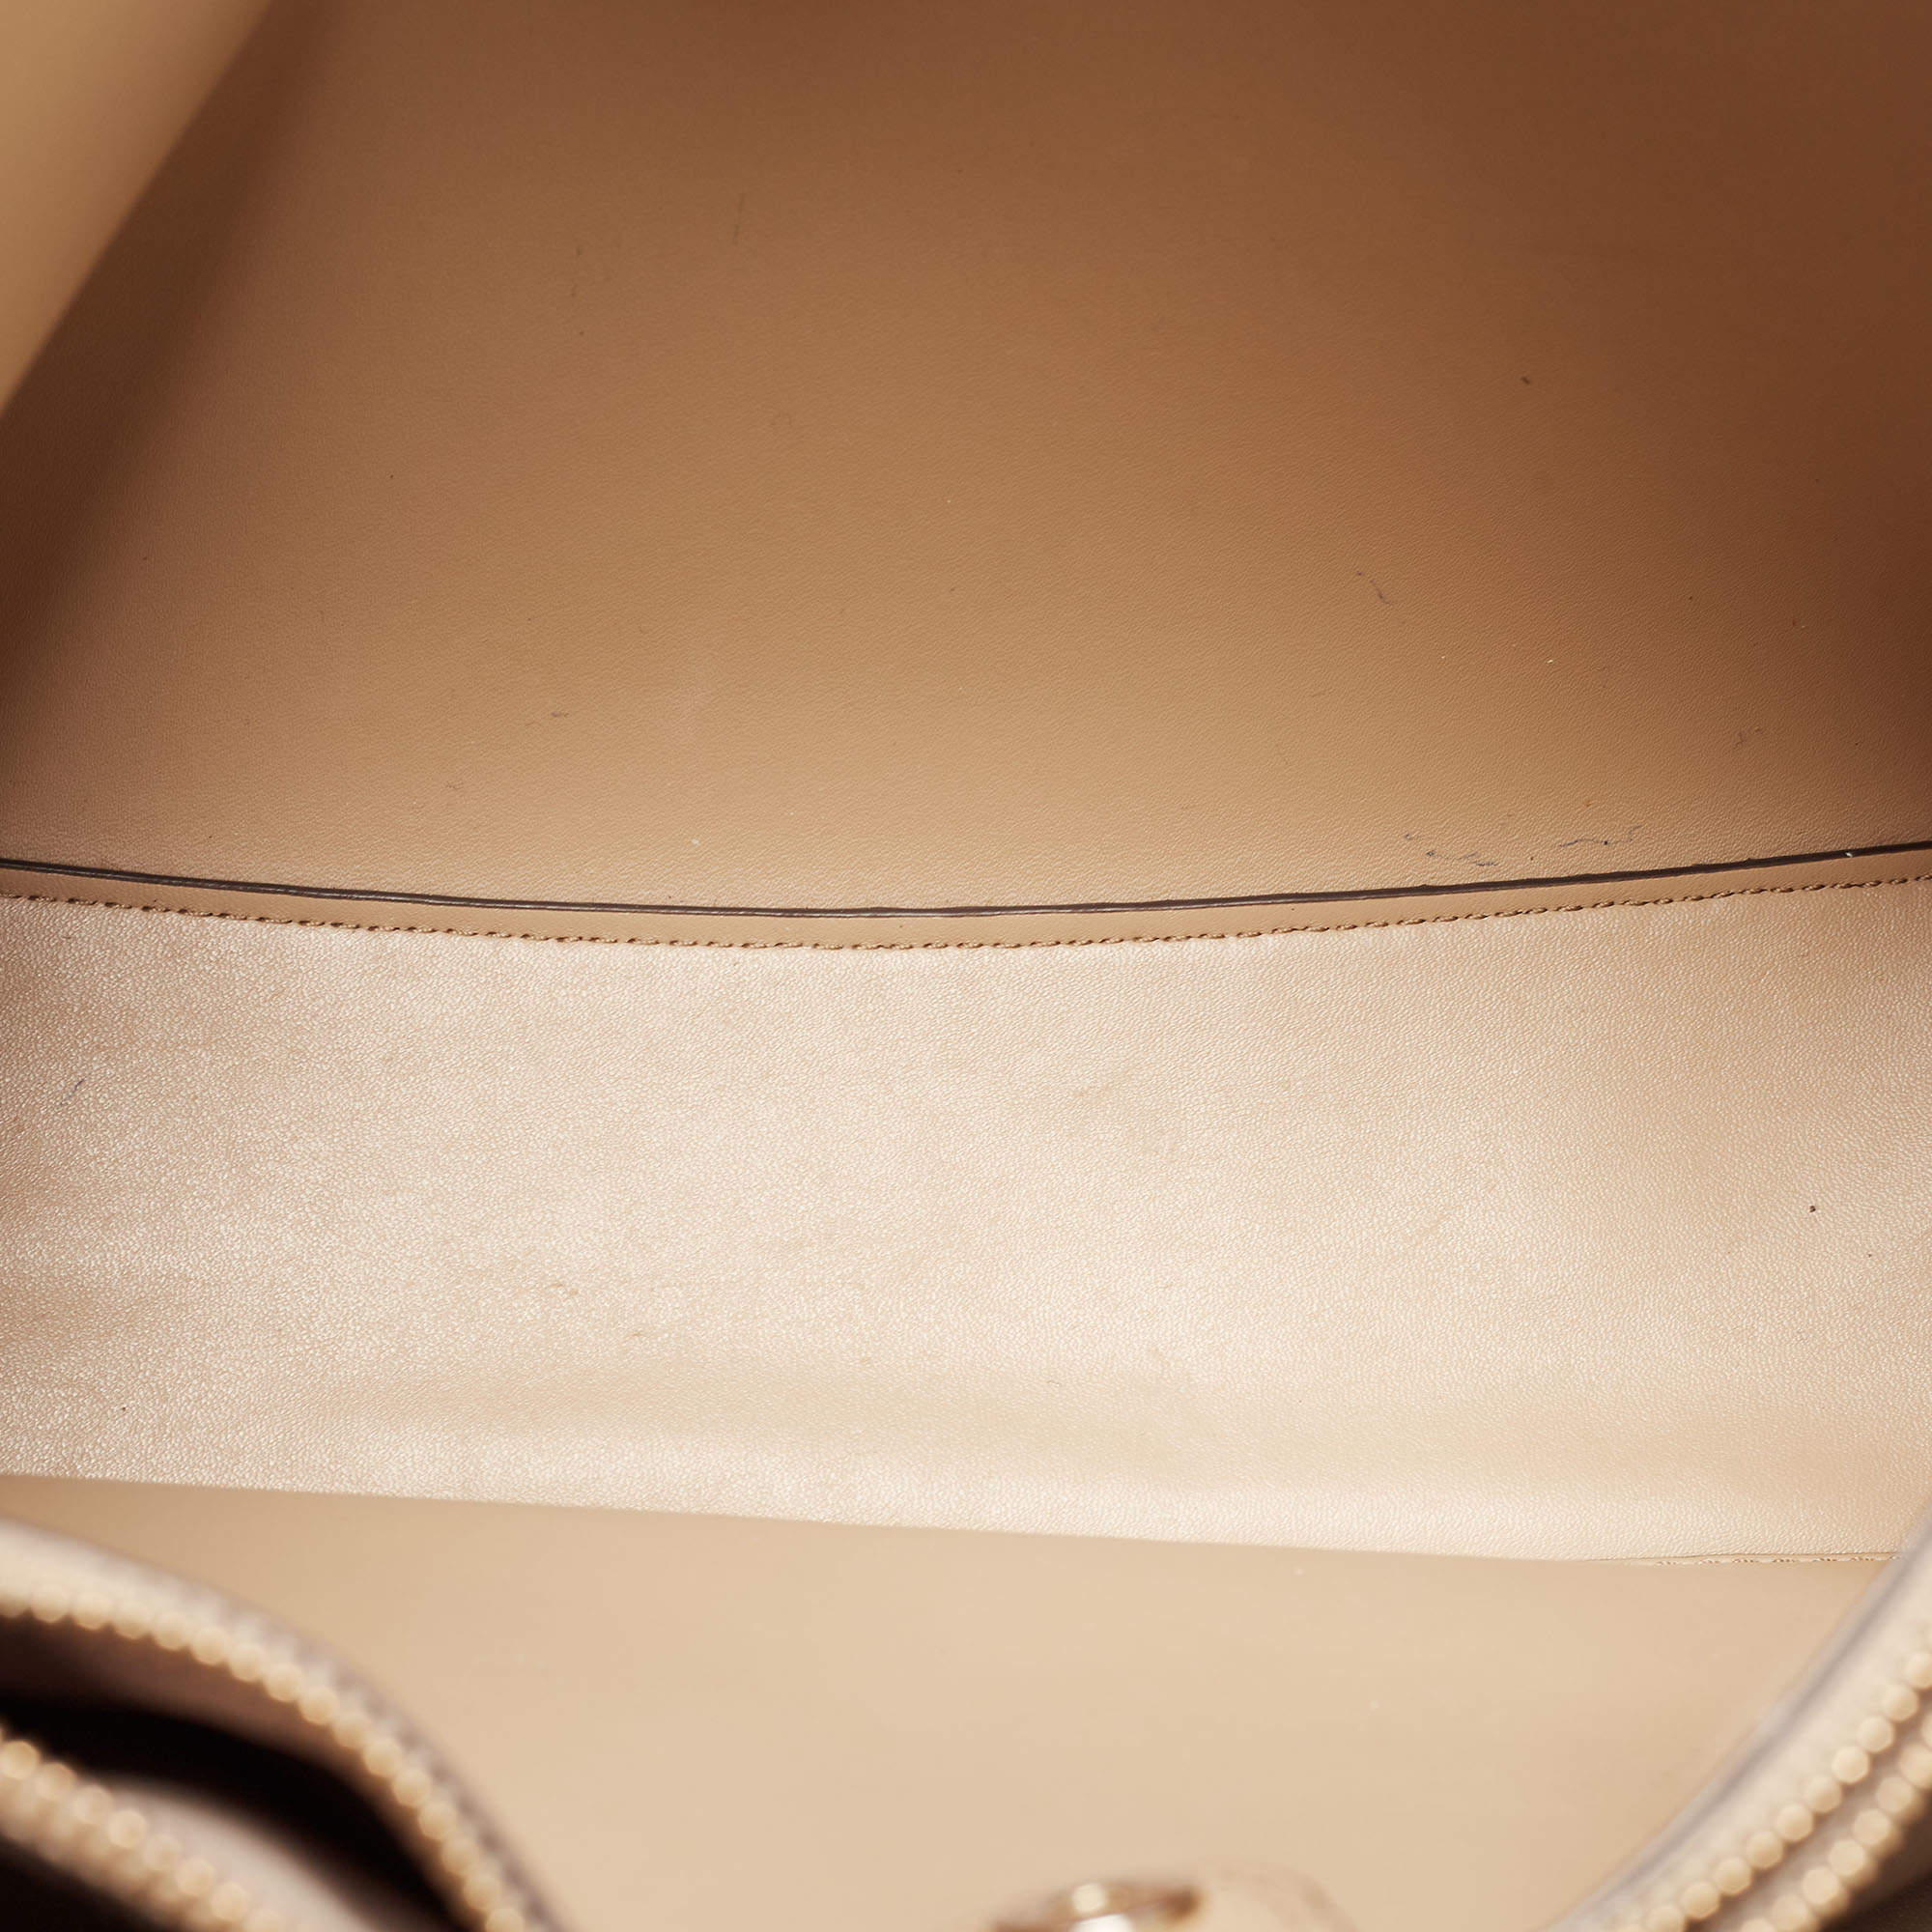 MICHAEL KORS Mel Medium Saffiano Leather Tote Bag Color: Soft Pink 